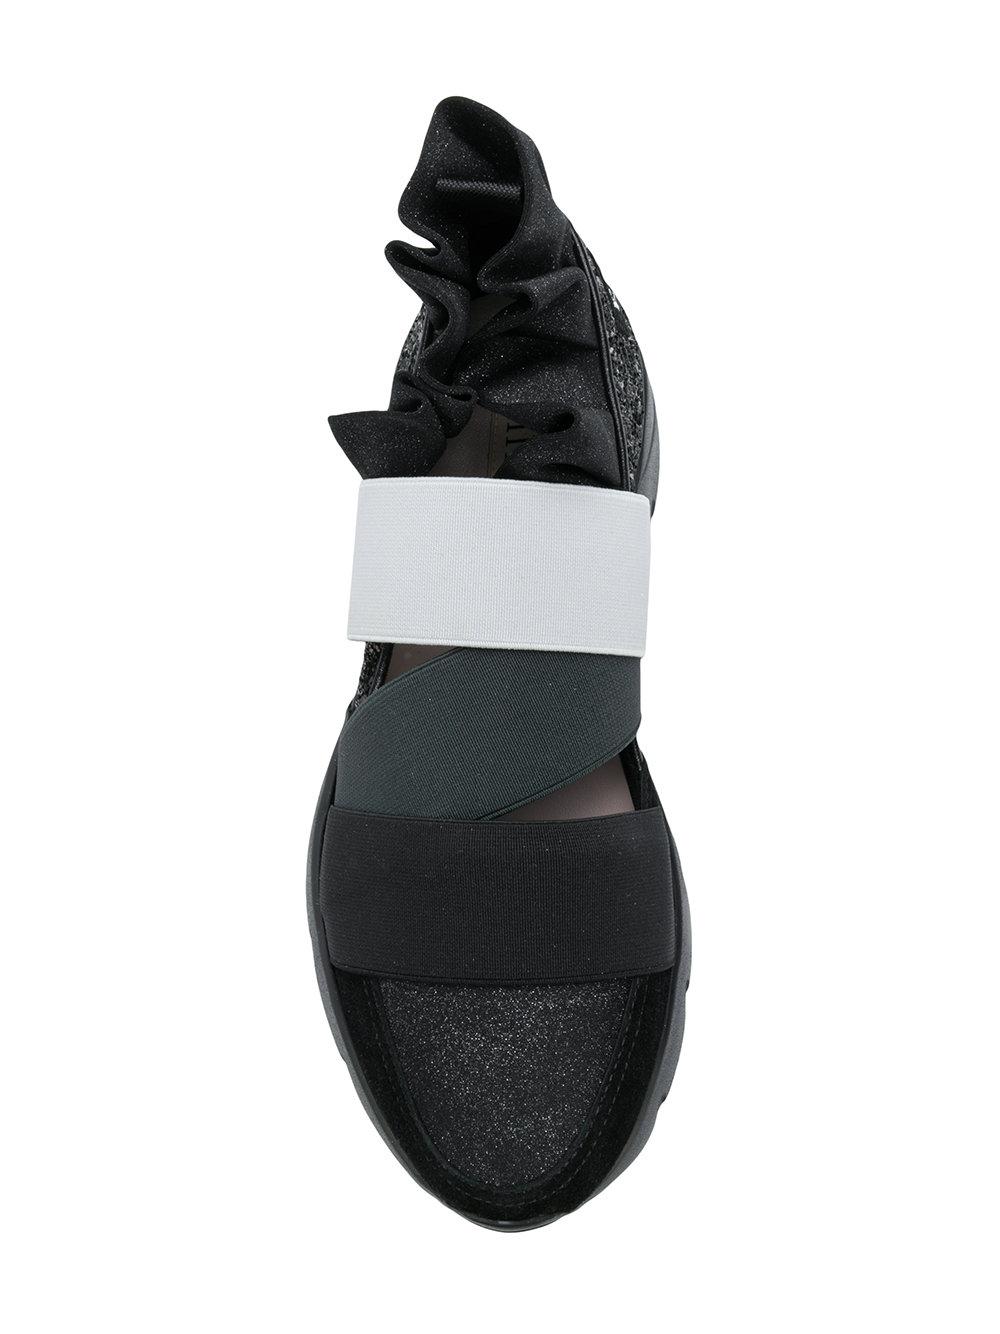 Emilio Pucci, Shoes, Like New Emilio Pucci Satin Blue Marine Print Black  Nappa Leather Sandals Us 75